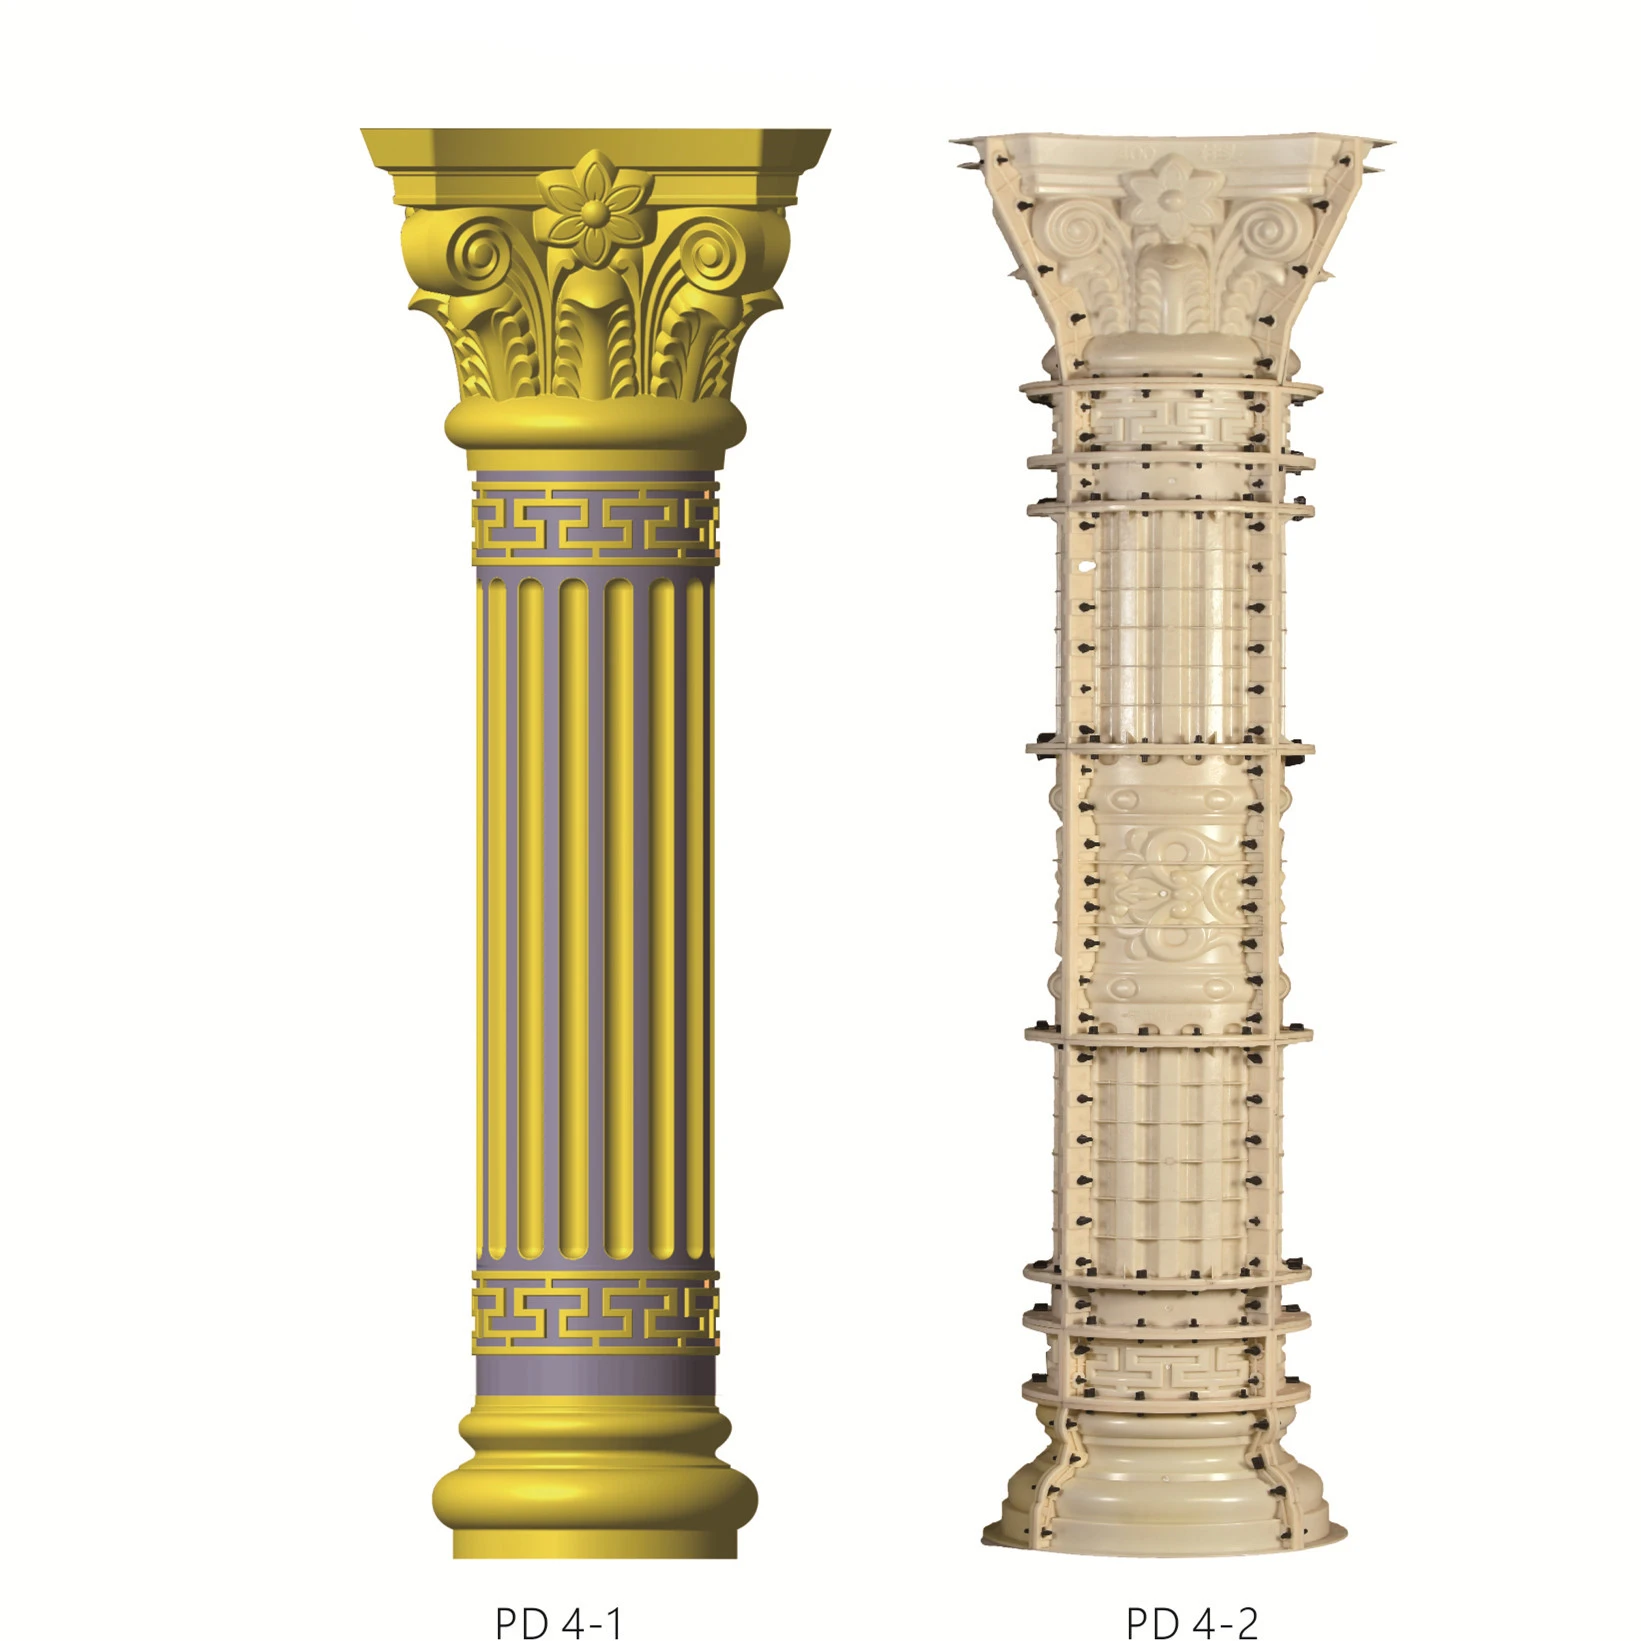 plastic concrete 30x300 roman pillars column molds